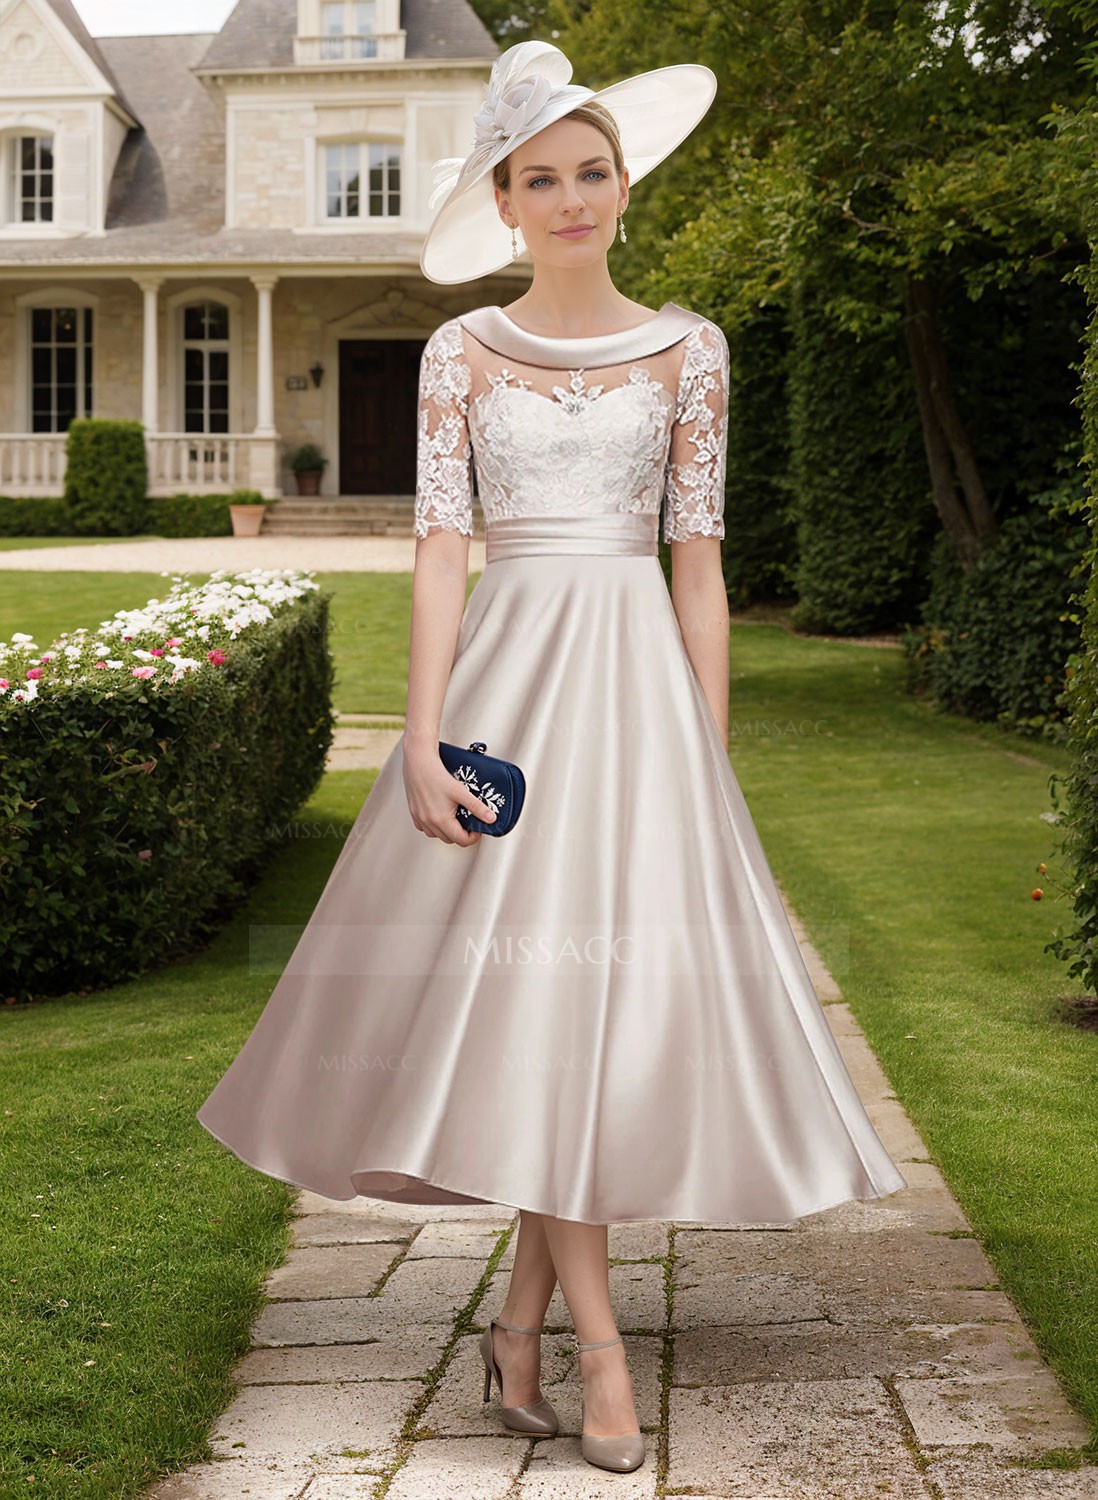 Elegant Cowl Neck A-Line Tea-Length Mother Of The Bride Dresses